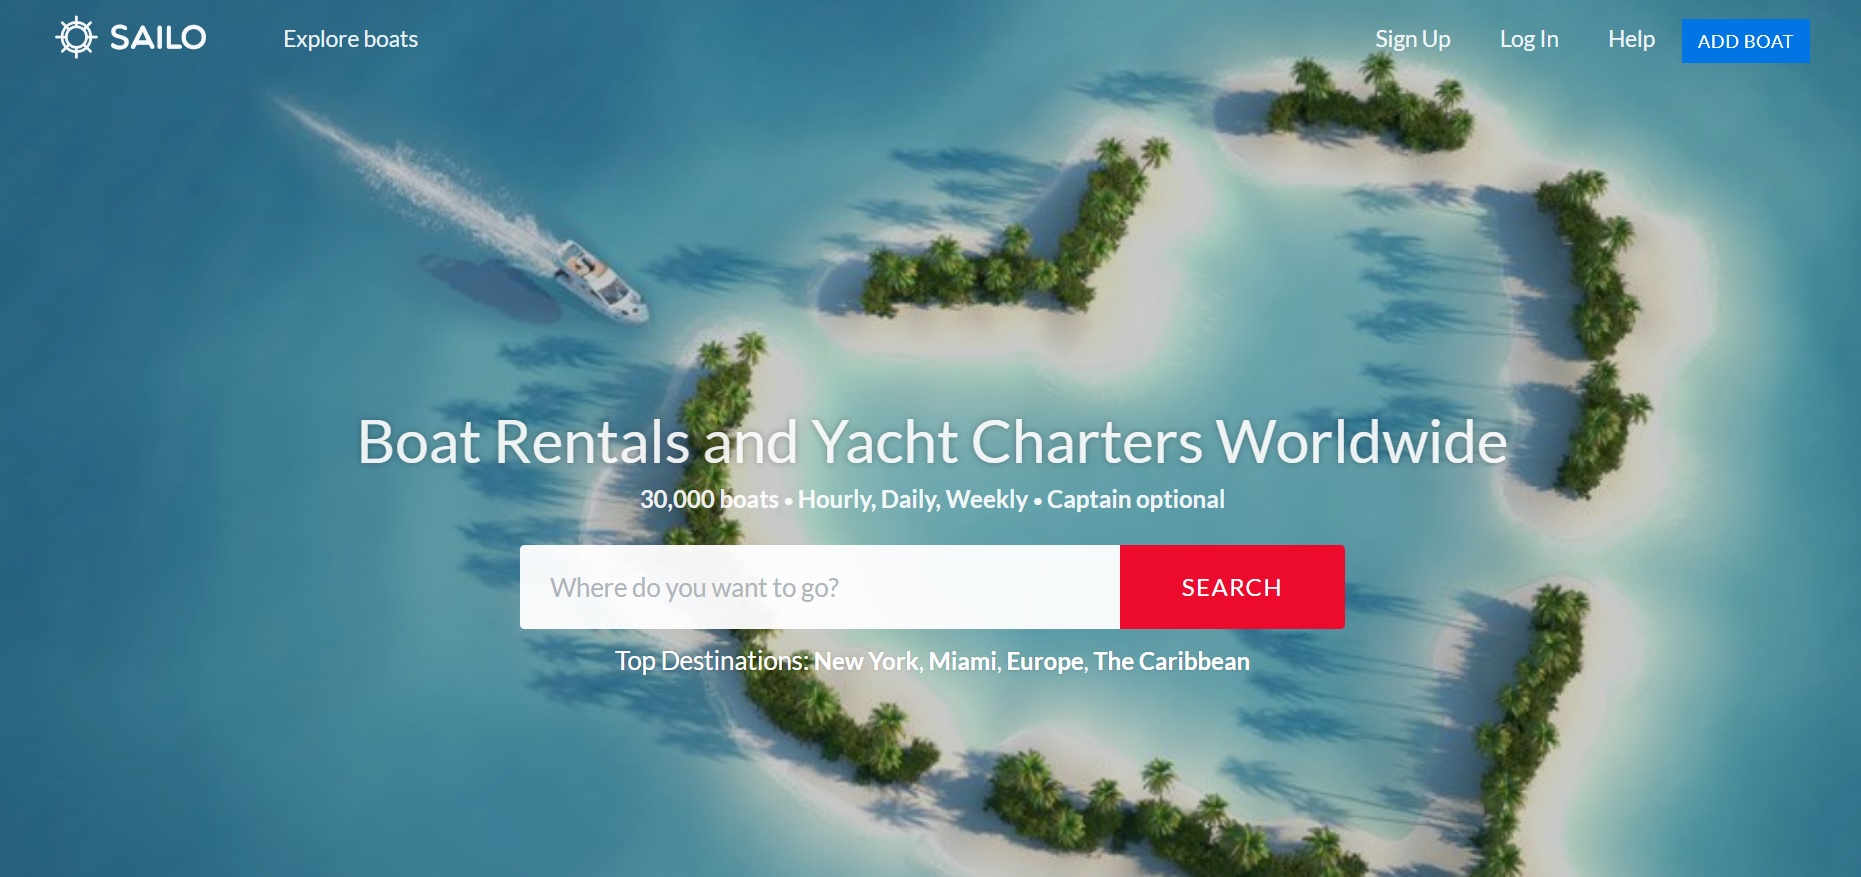 Boat Rental Website's Visibility - Sailo